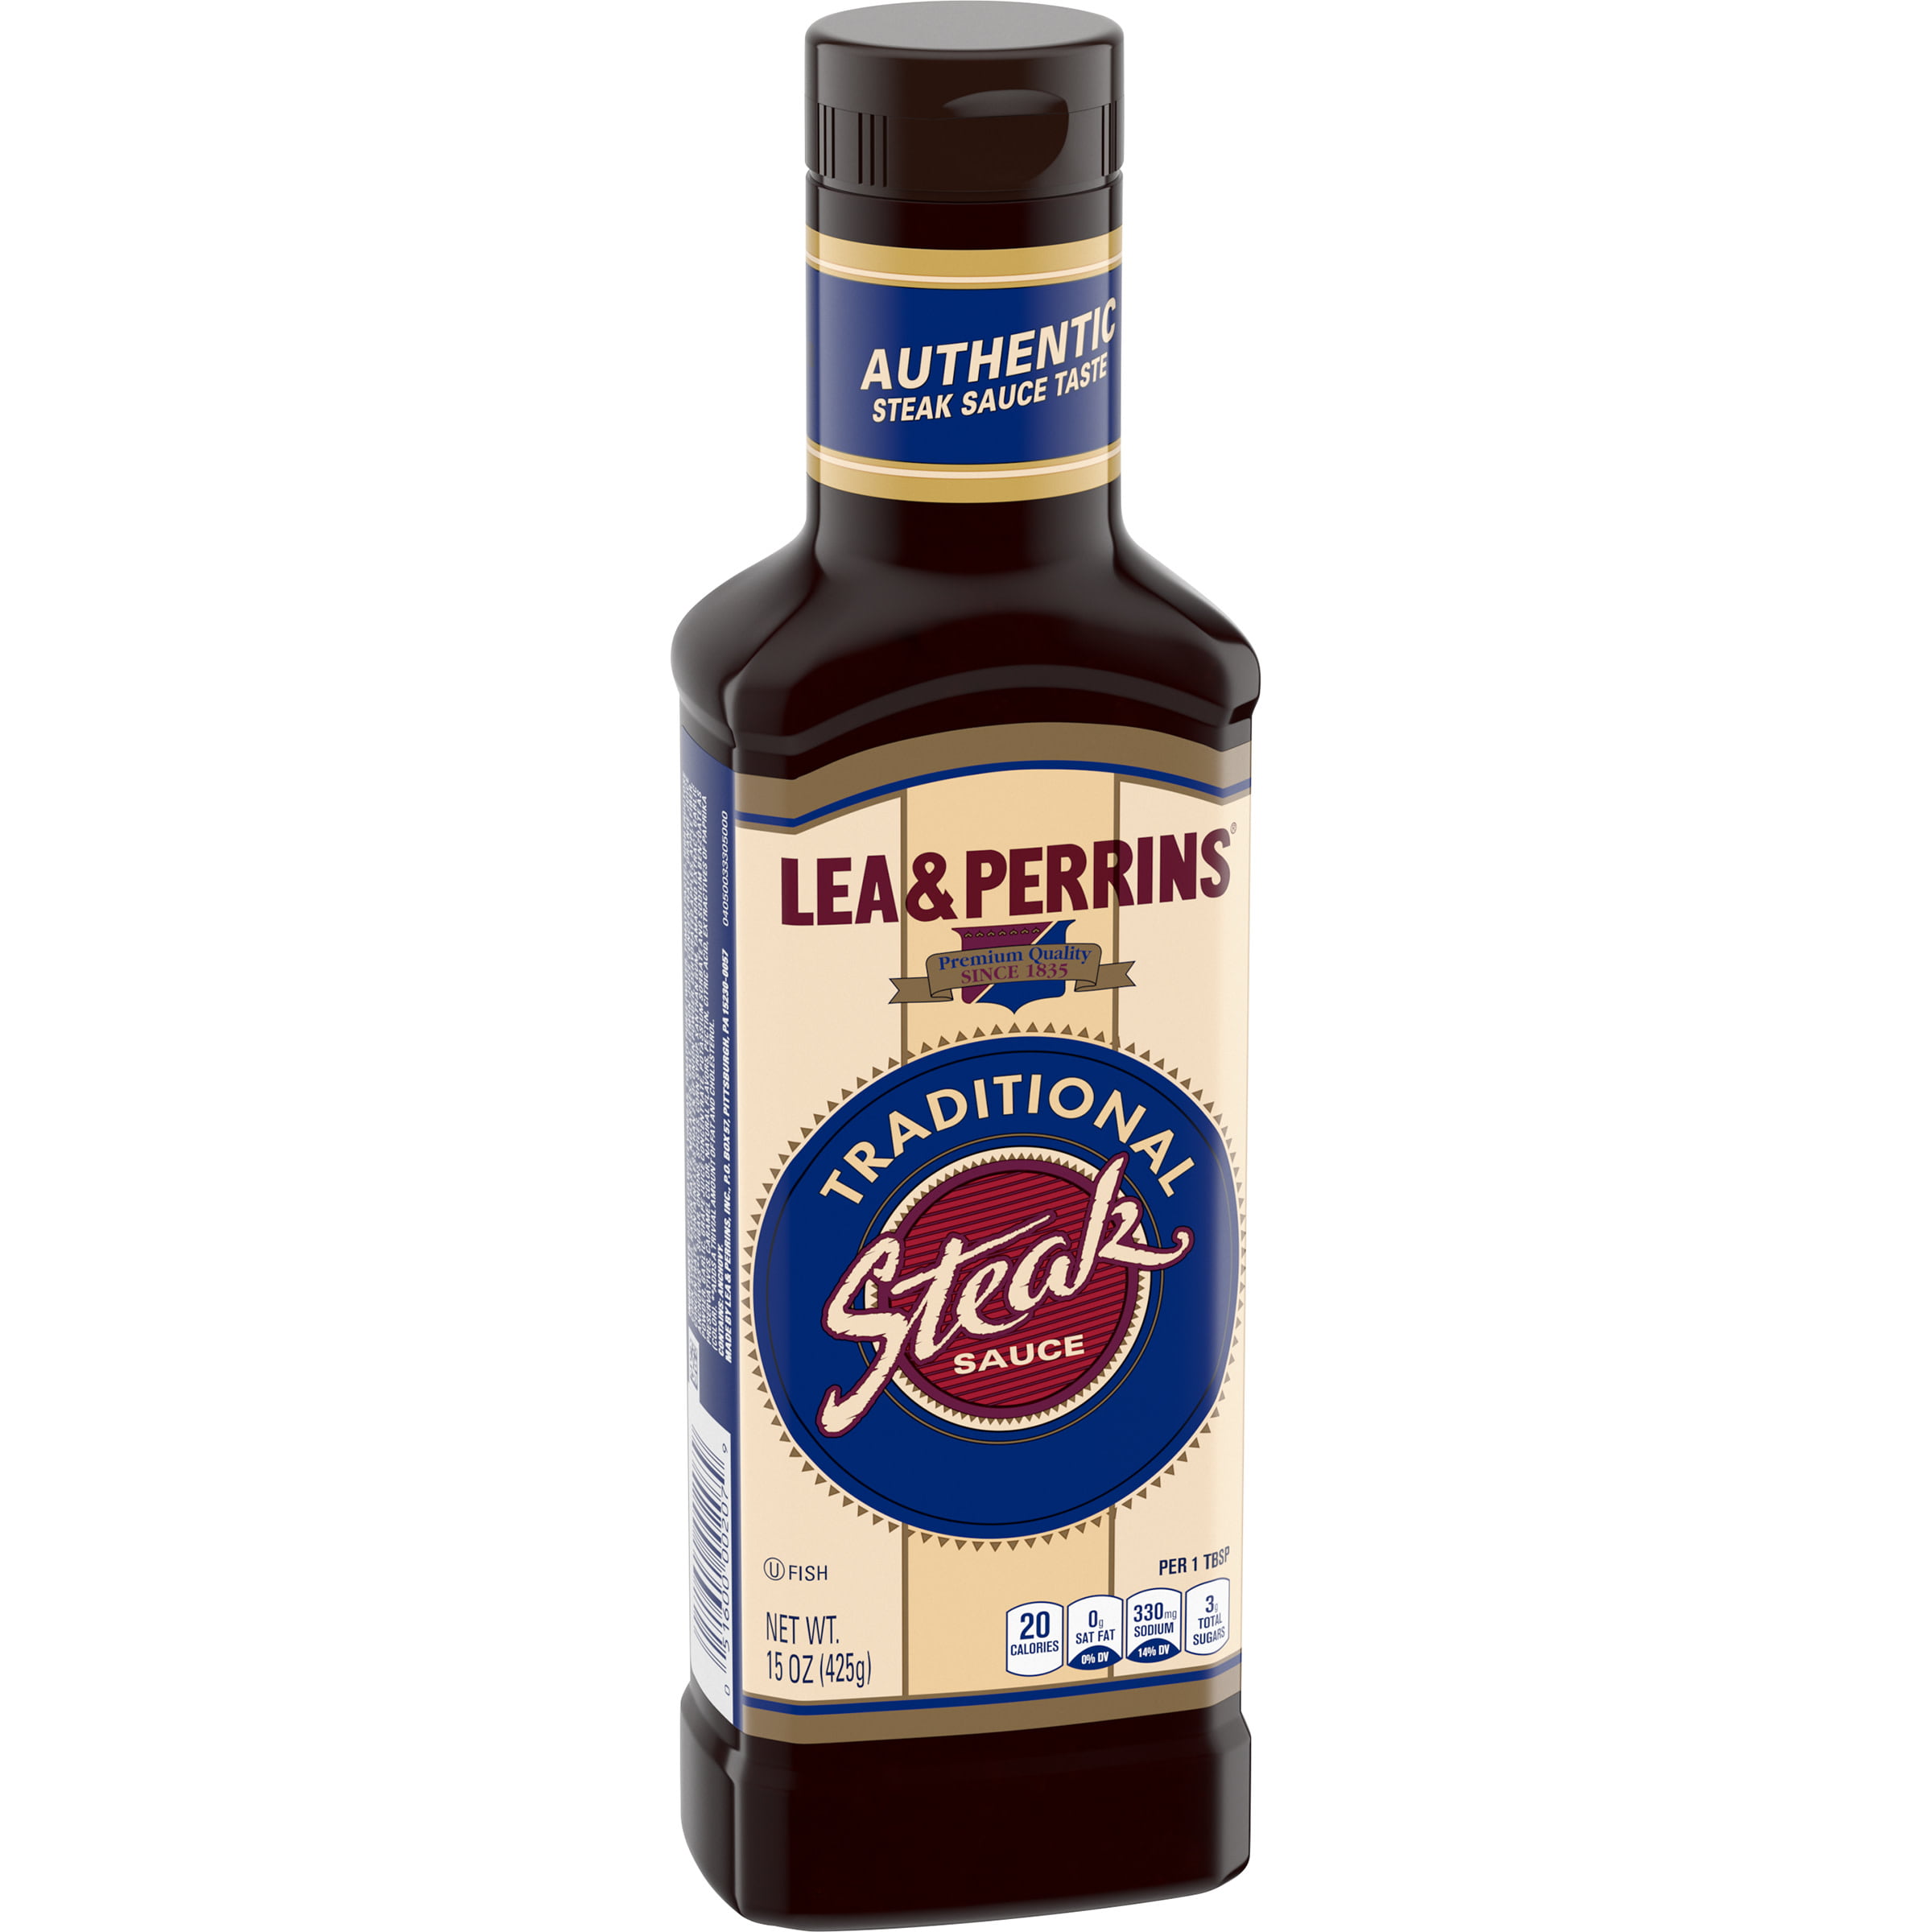 Lea & Perrins Traditional Steak Sauce, 15 oz. Bottle 